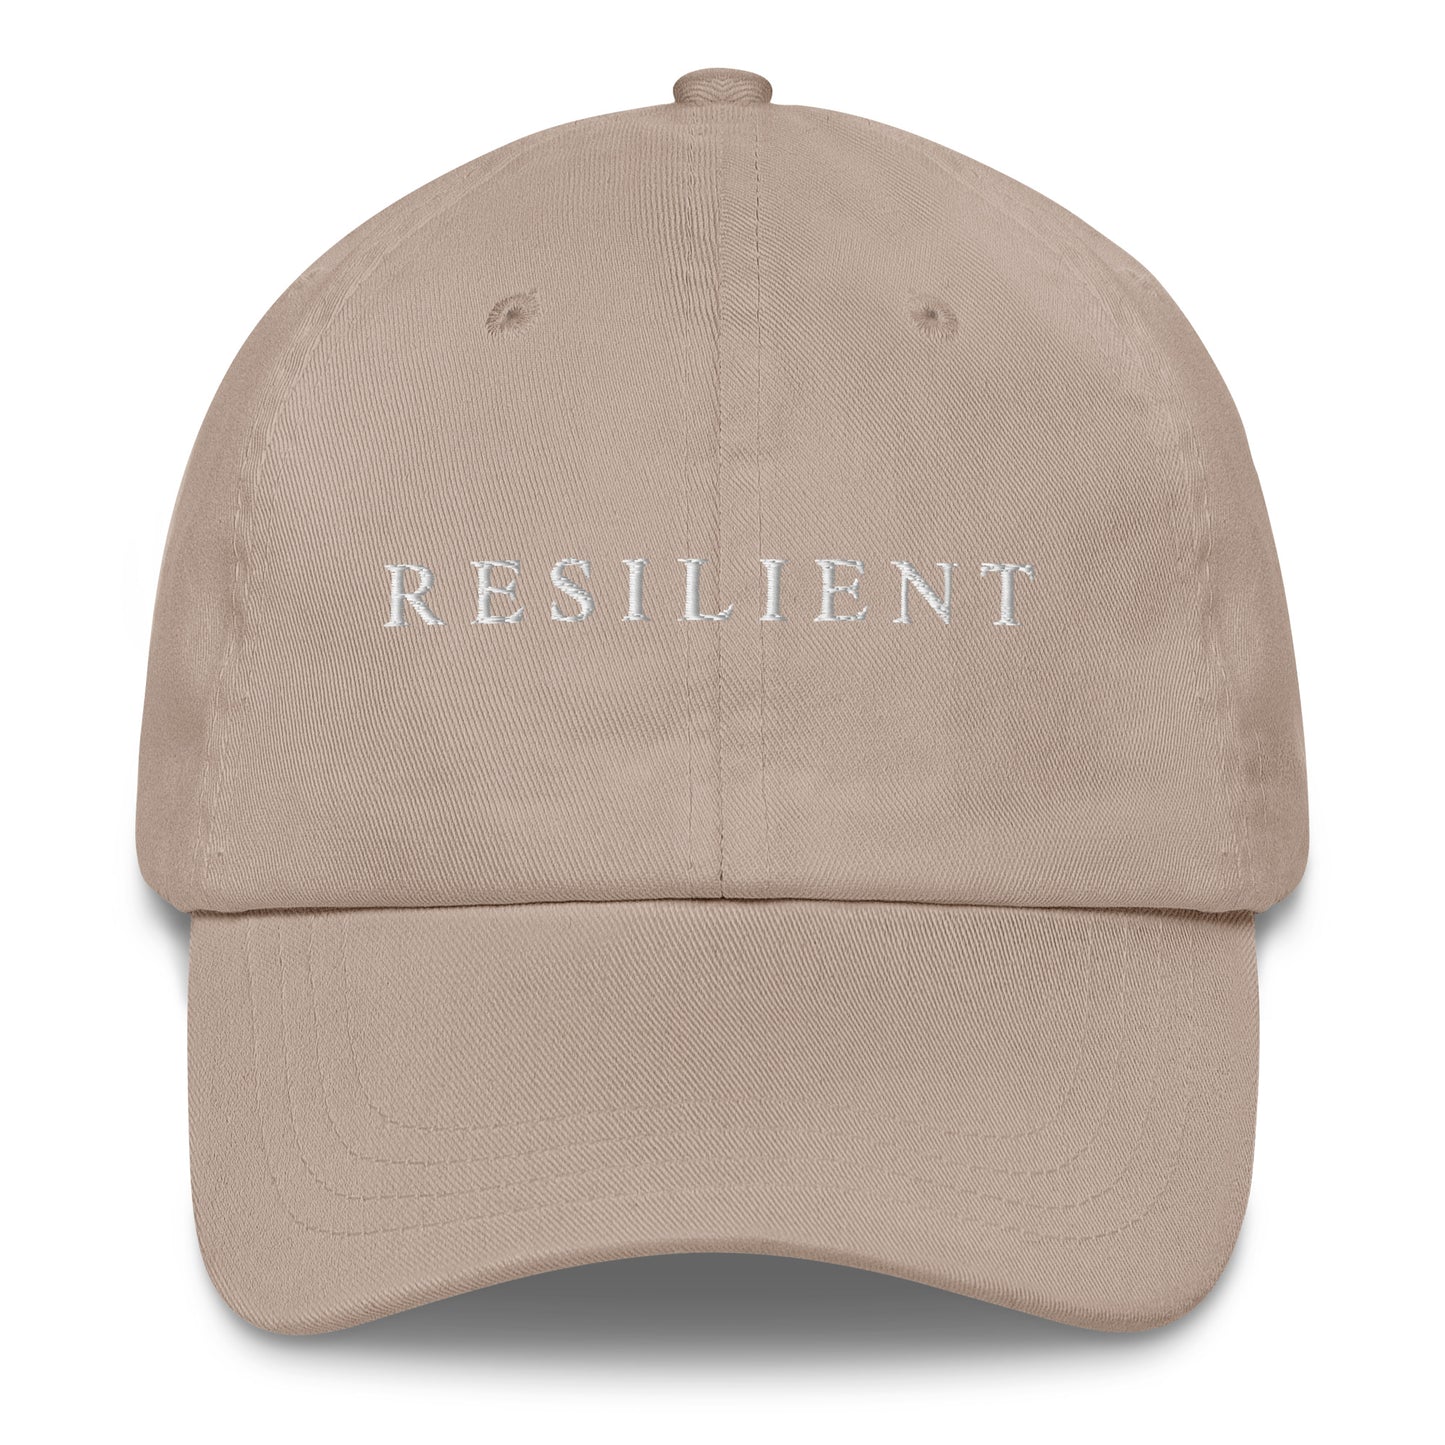 Resilient Cap